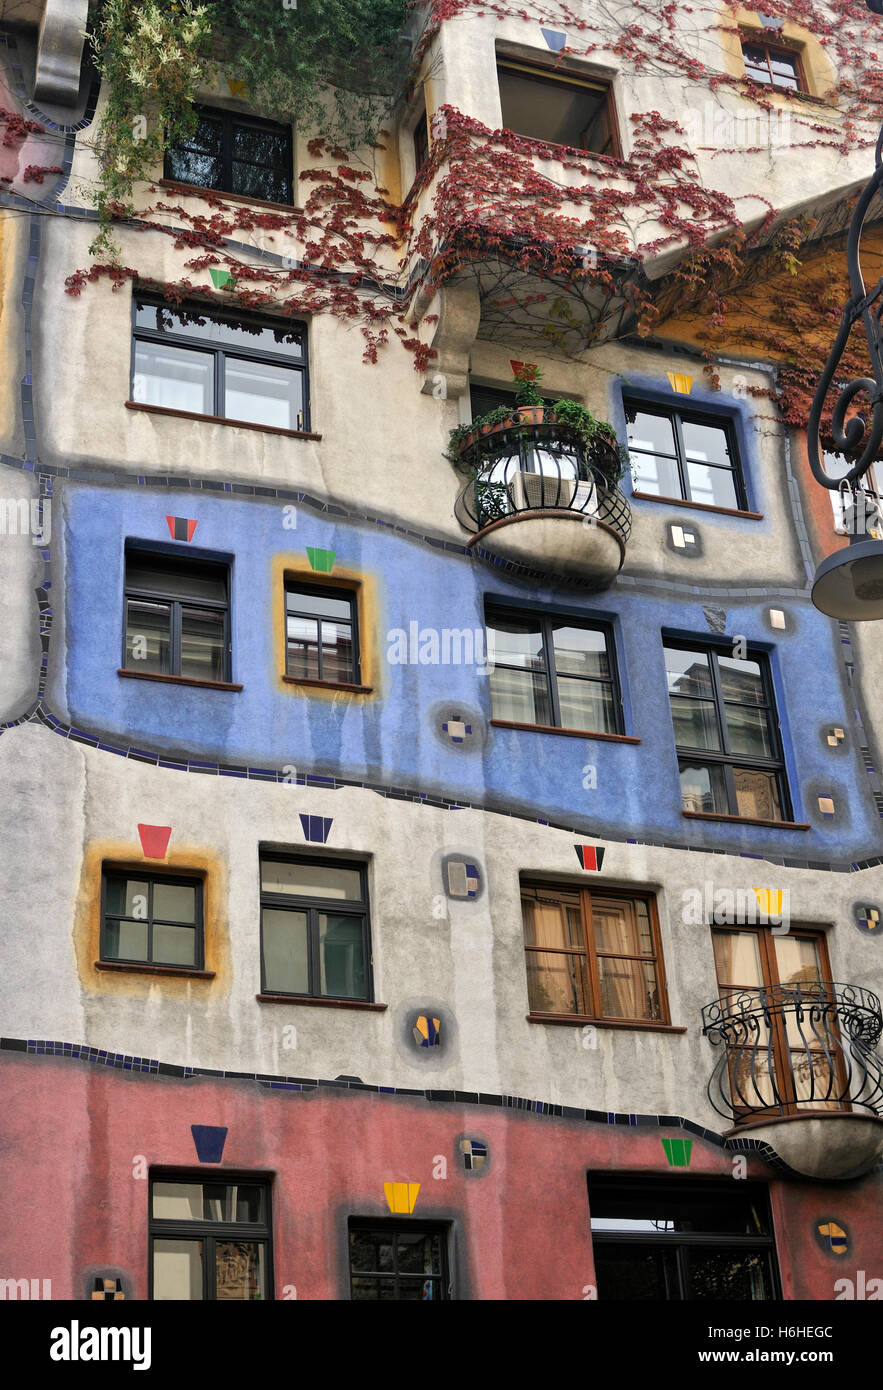 Detail of colorful facade of Hundertwasser House, Hundertwasserhaus, apartment building, Vienna, Austria, Europe Stock Photo